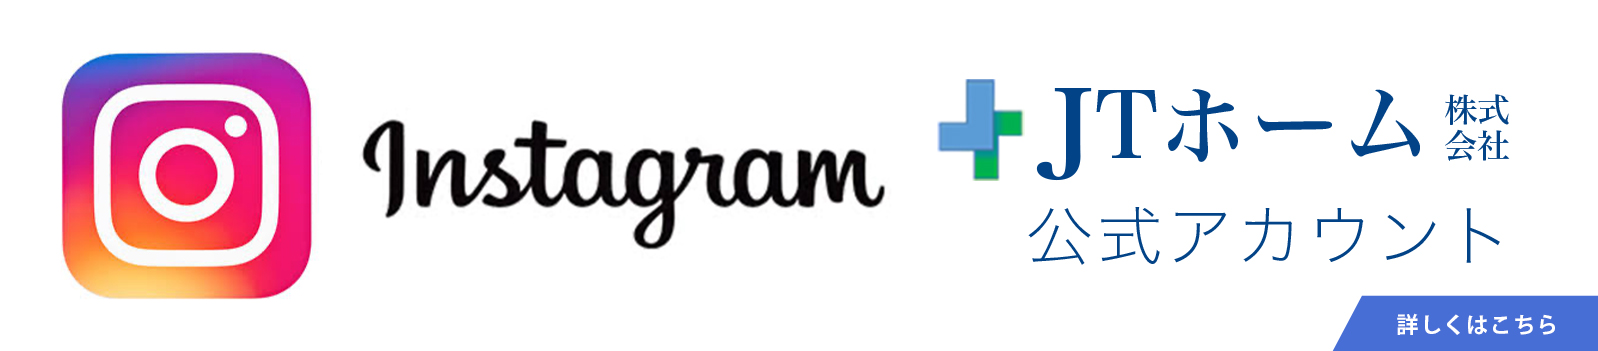 InstagramJTホーム株式会社公式アカウント